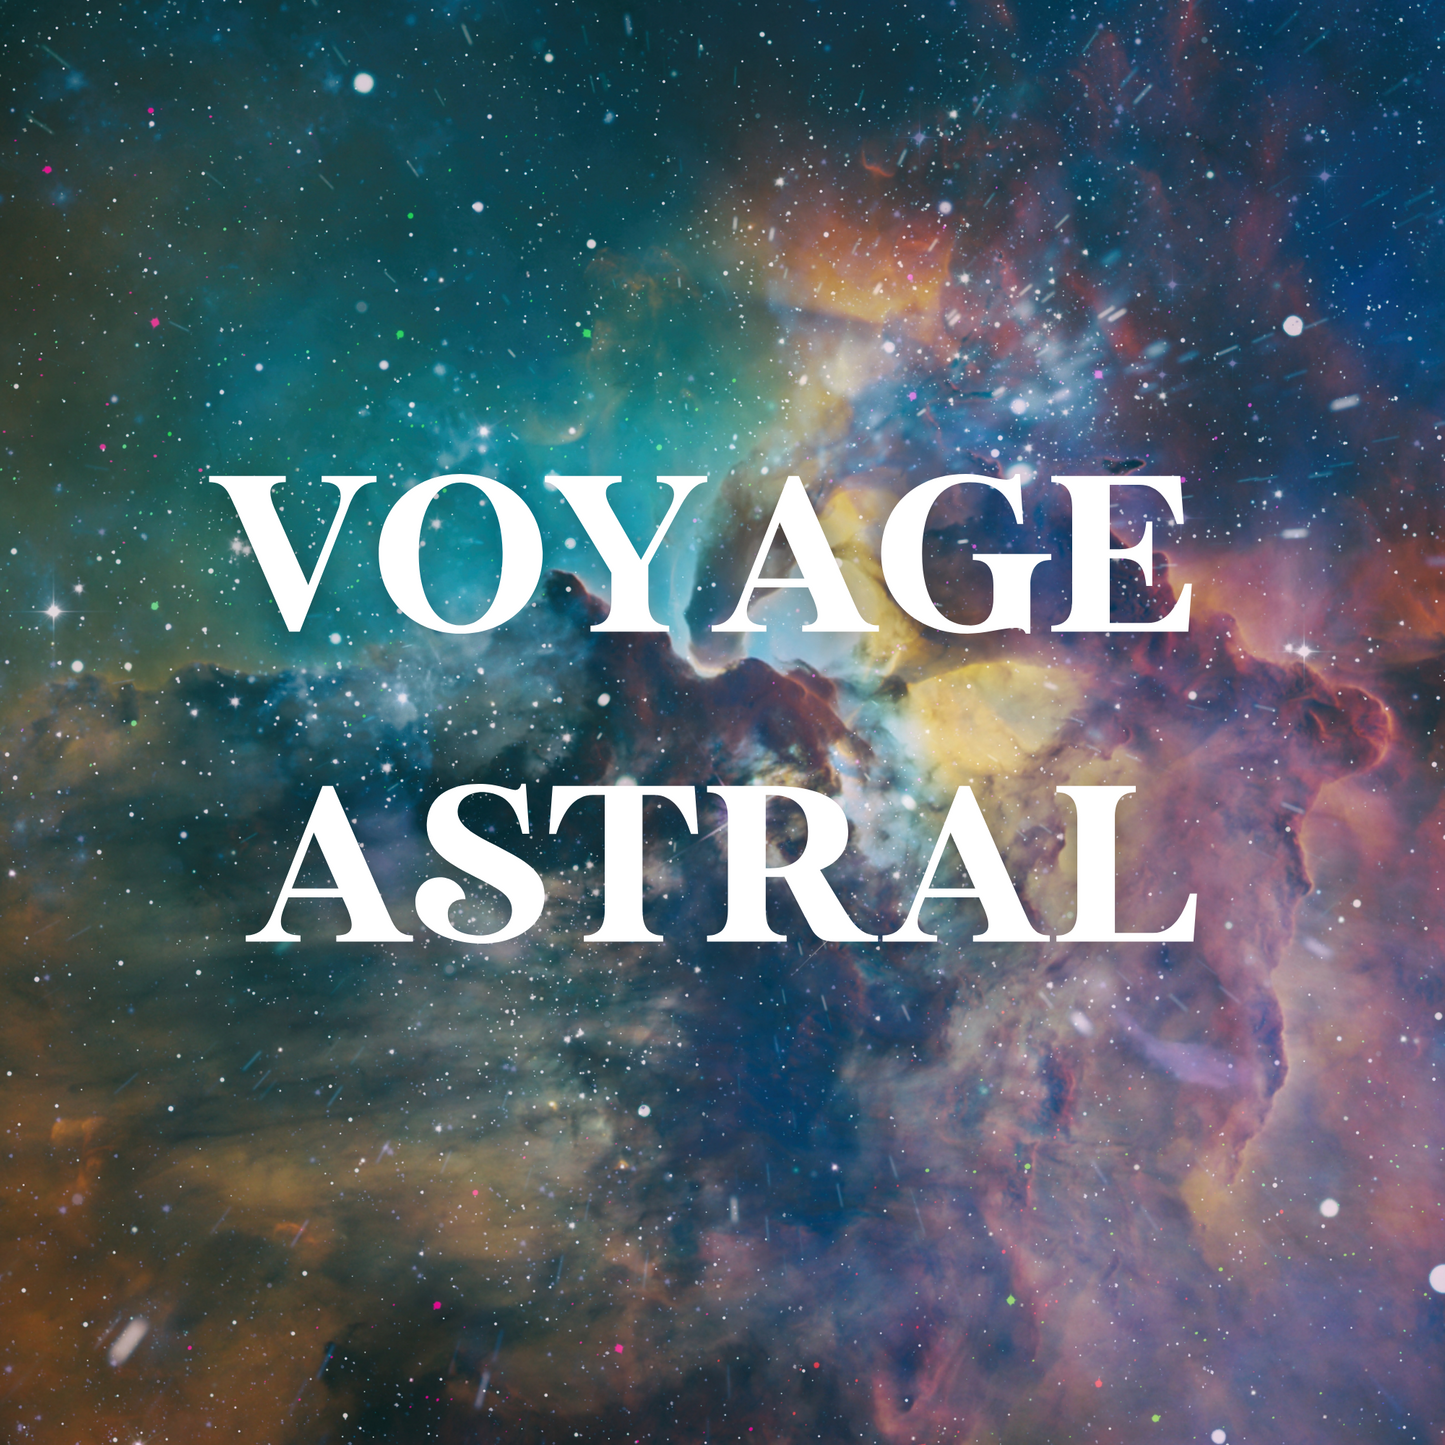 Voyage Astral